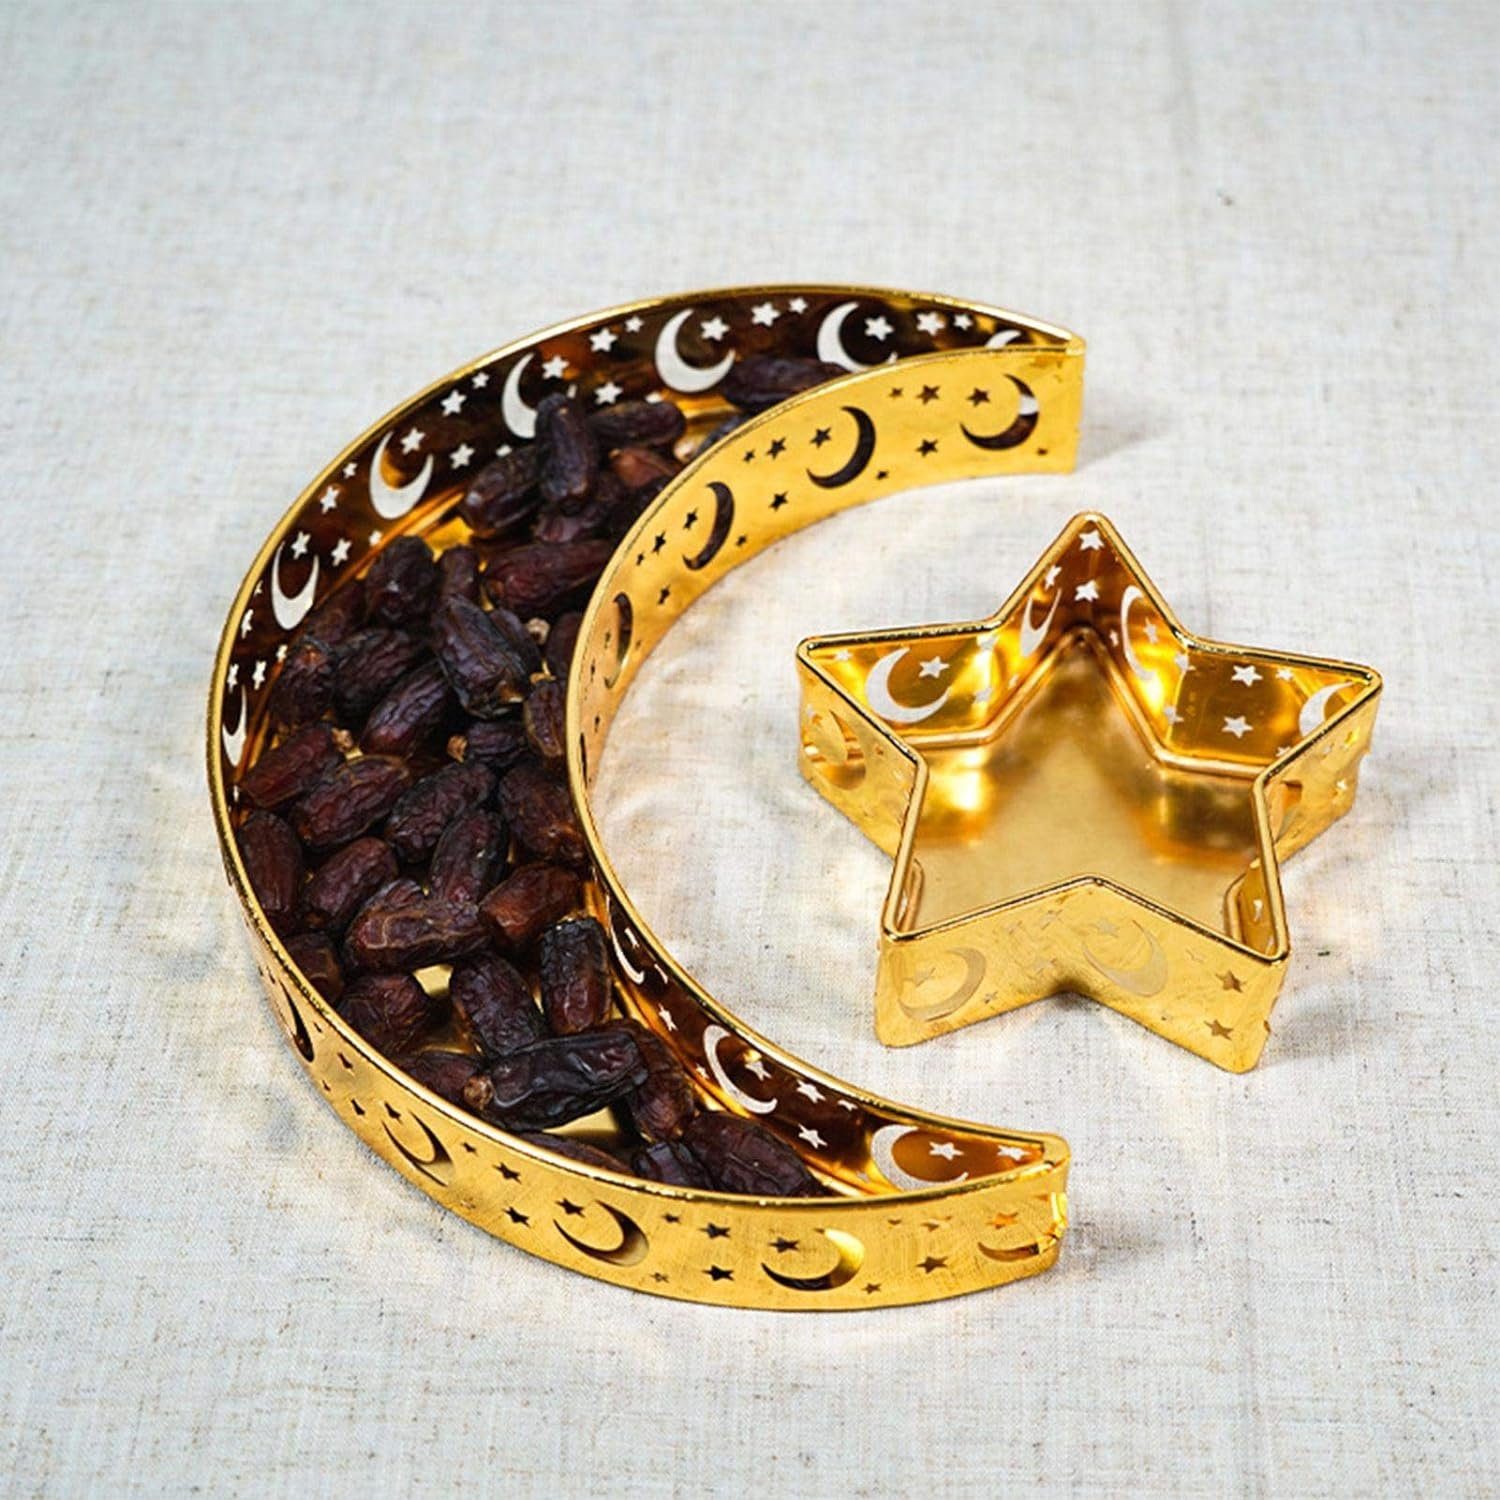 Jormftte Tablett Muslim Eid Food Tray,Moon Star Form Tablett,für Home Deko Gold, Weiß2